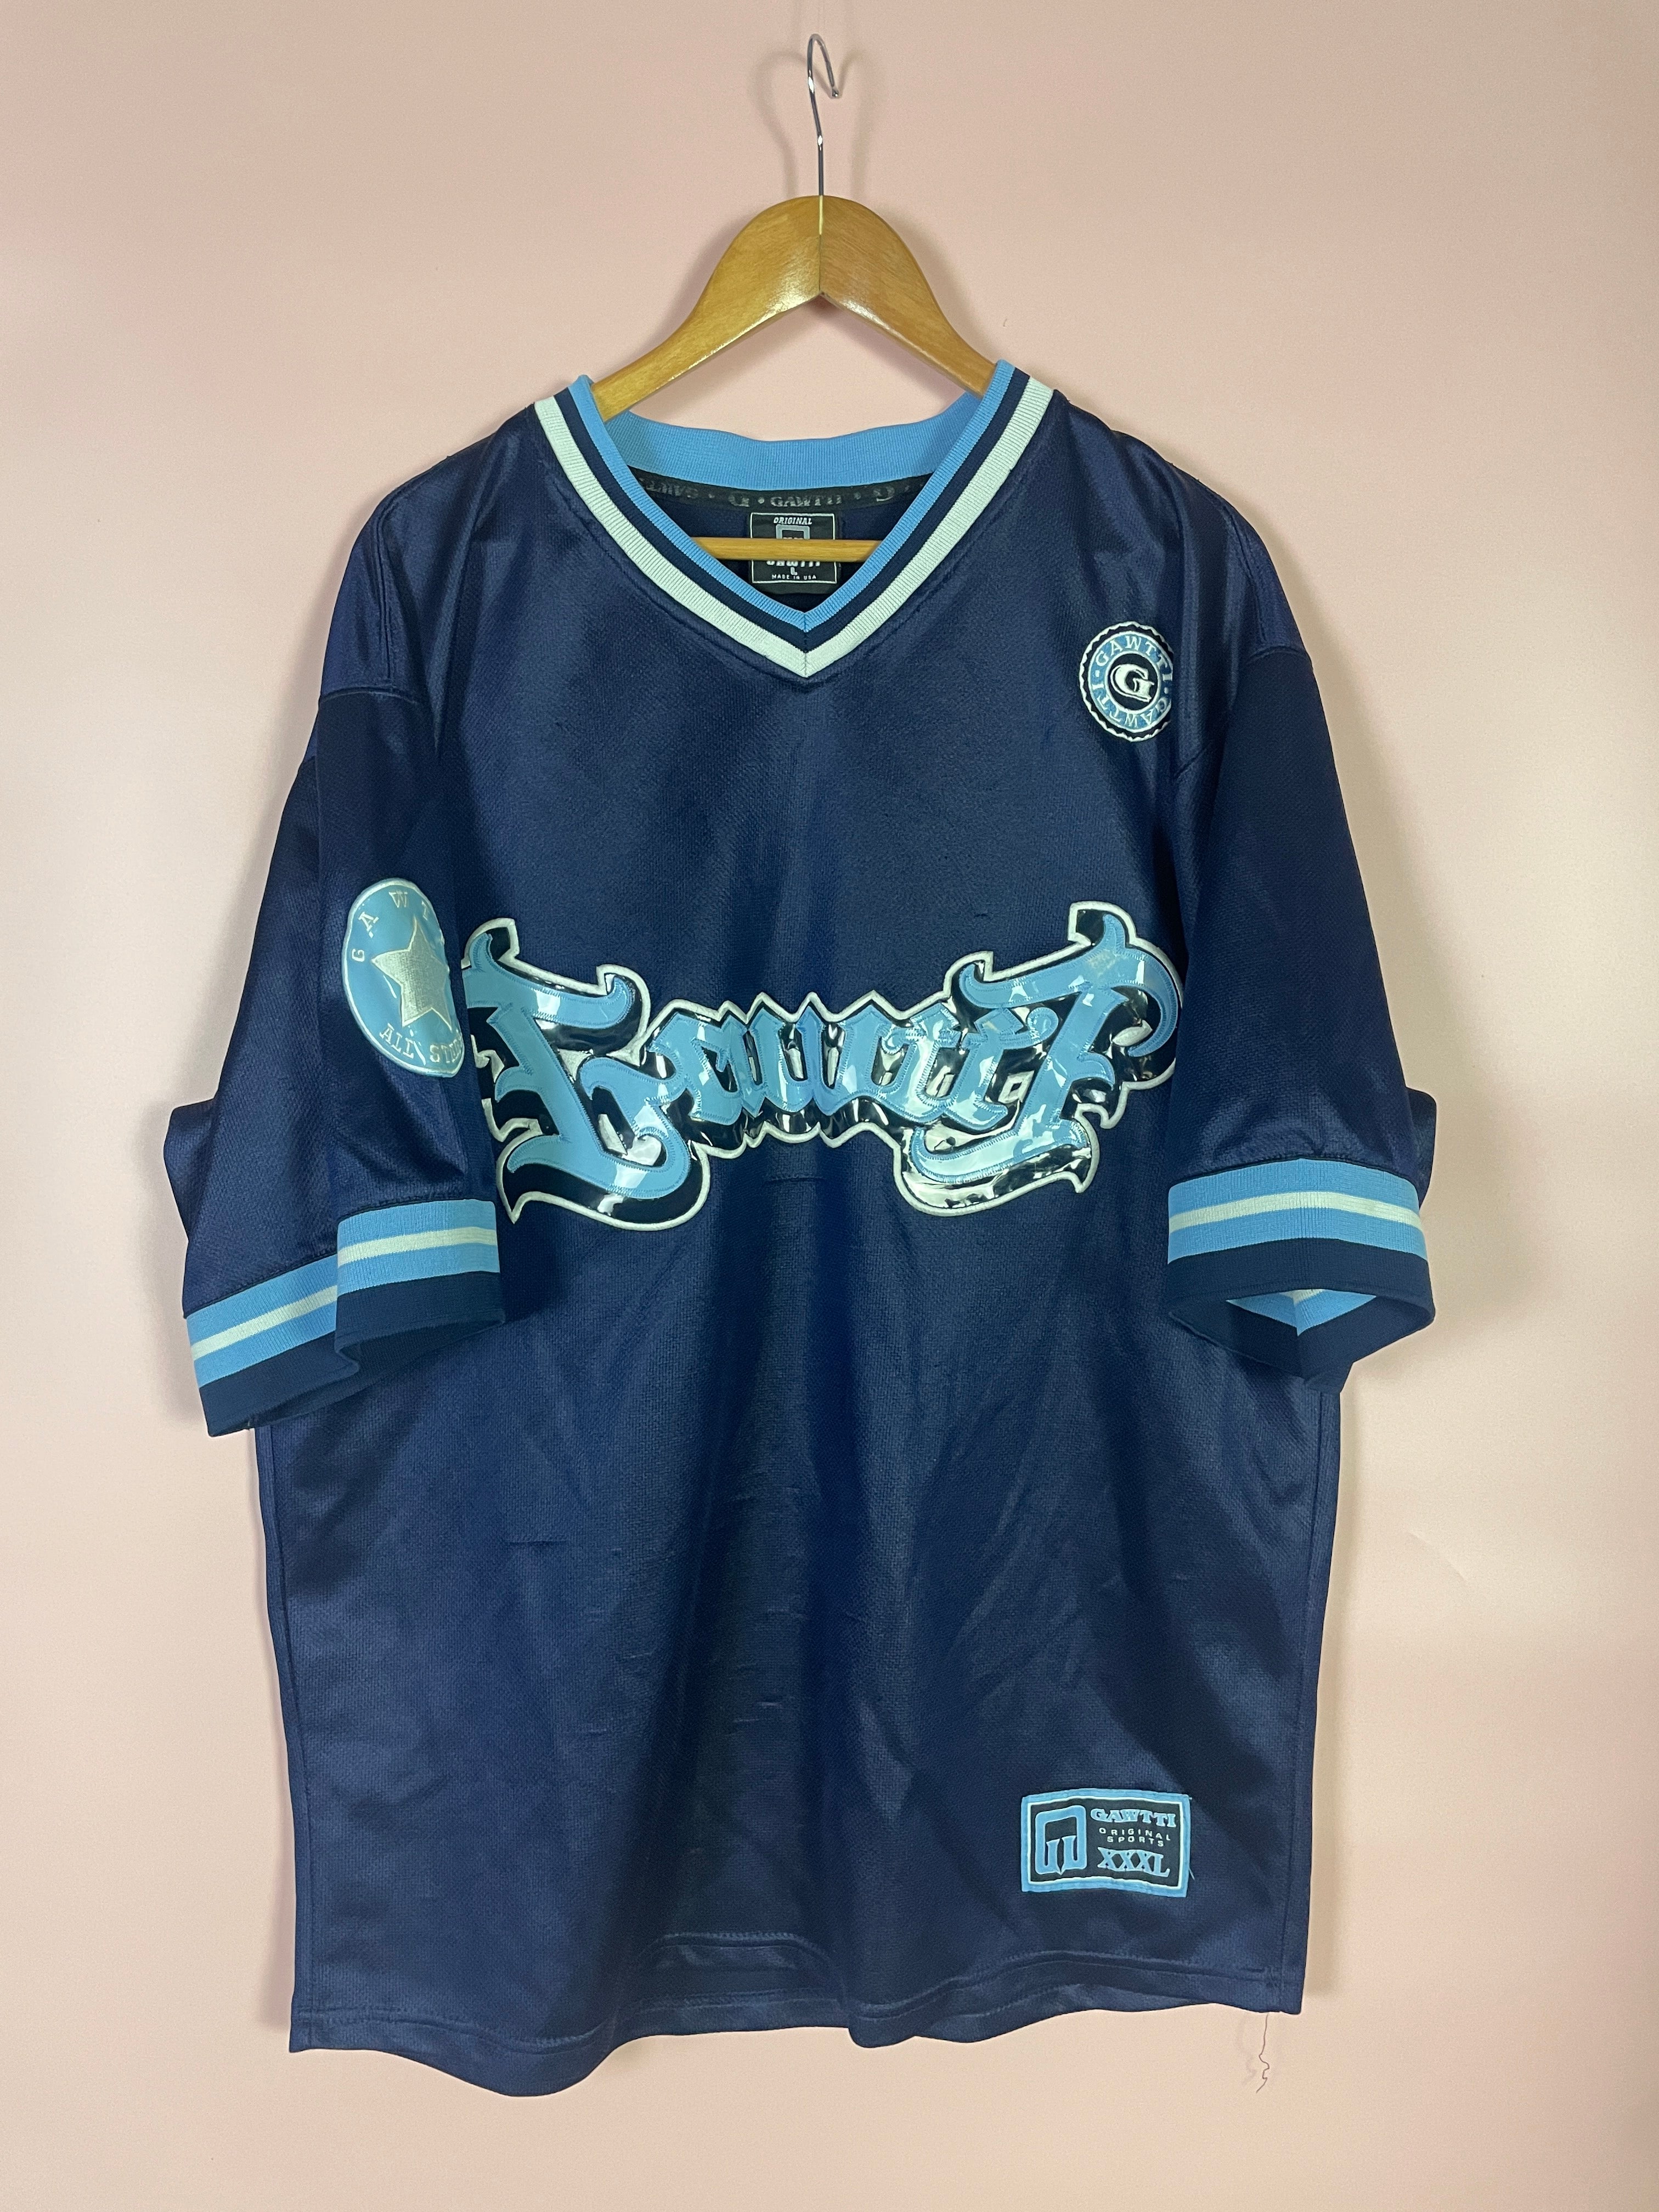 L Gawtti Jersey Vintage T-Shirt blau Hip Hop 90er